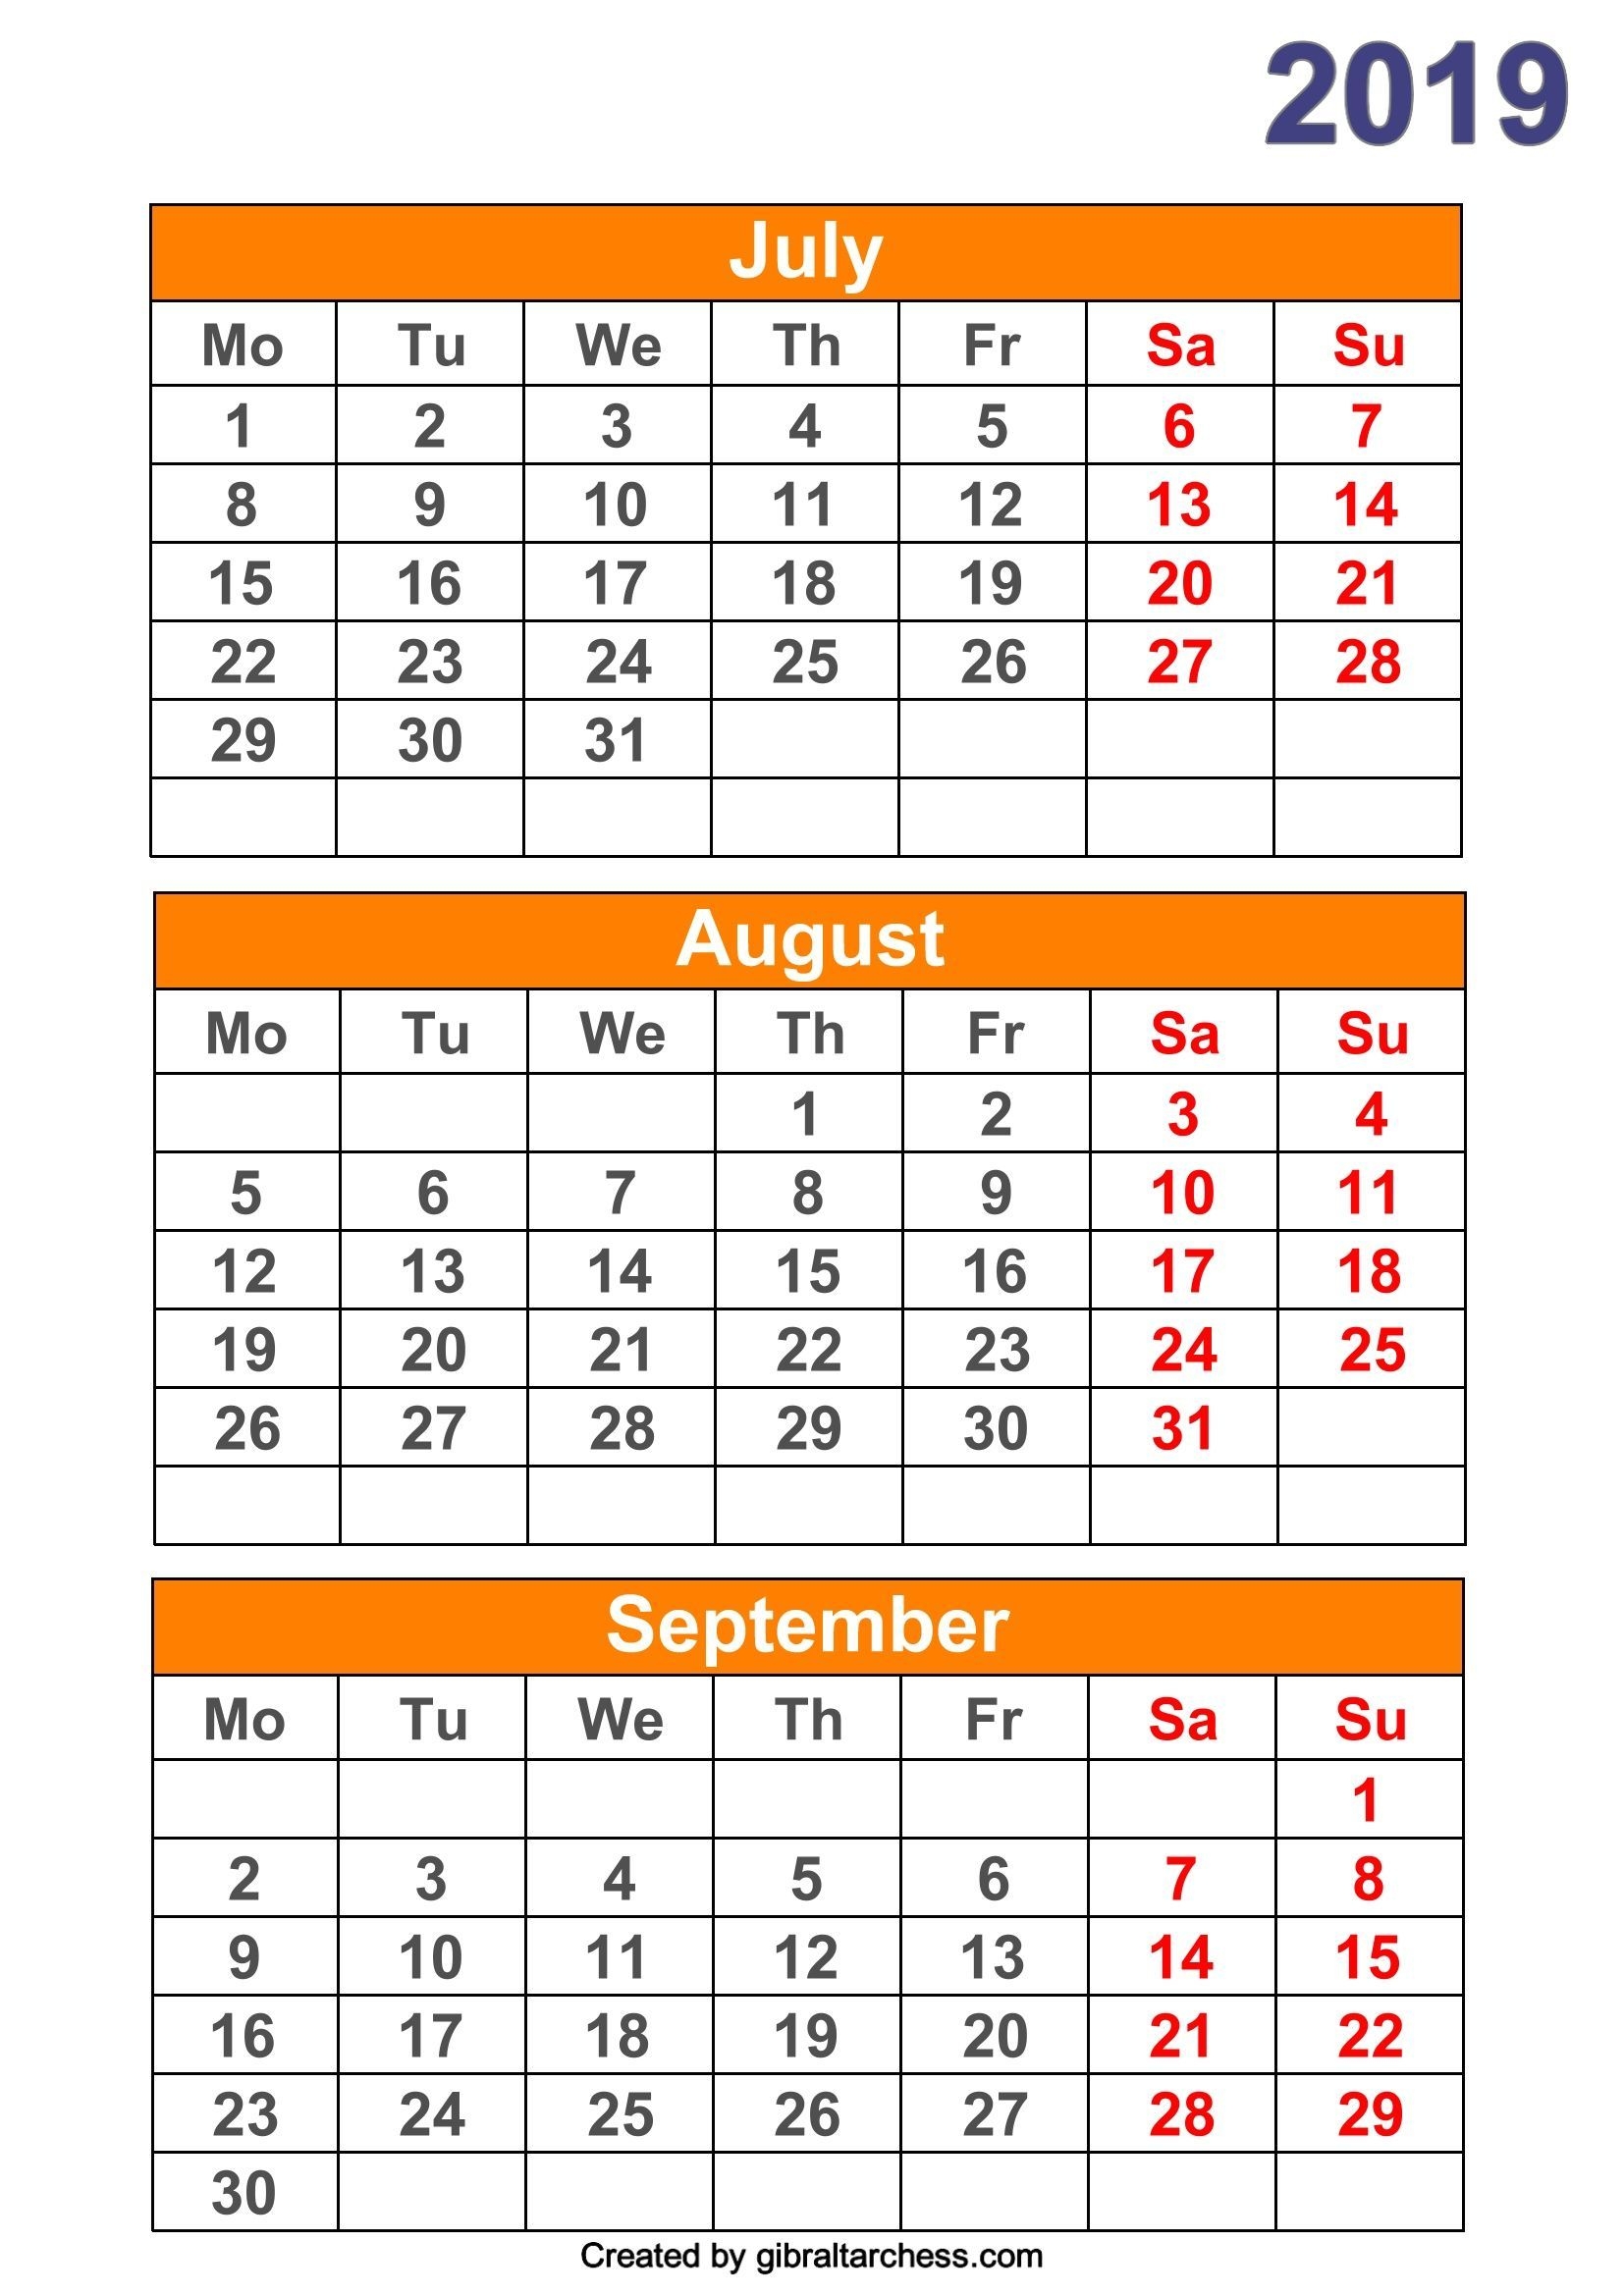 2019 calendar 4 months per page printable